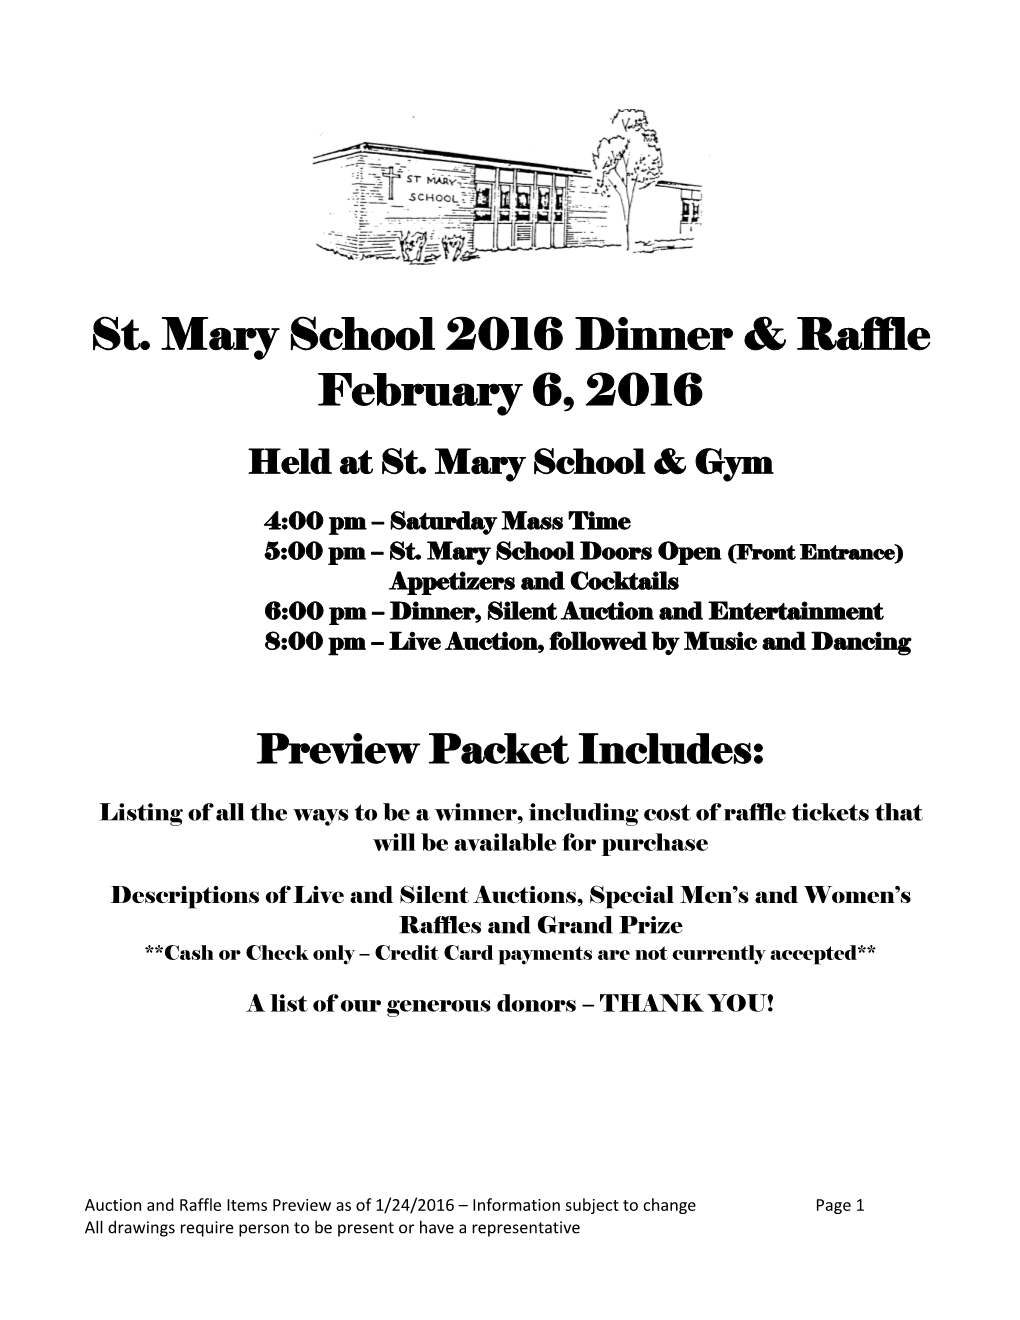 St. Mary School 2016 Dinner & Raffle February 6, 2016